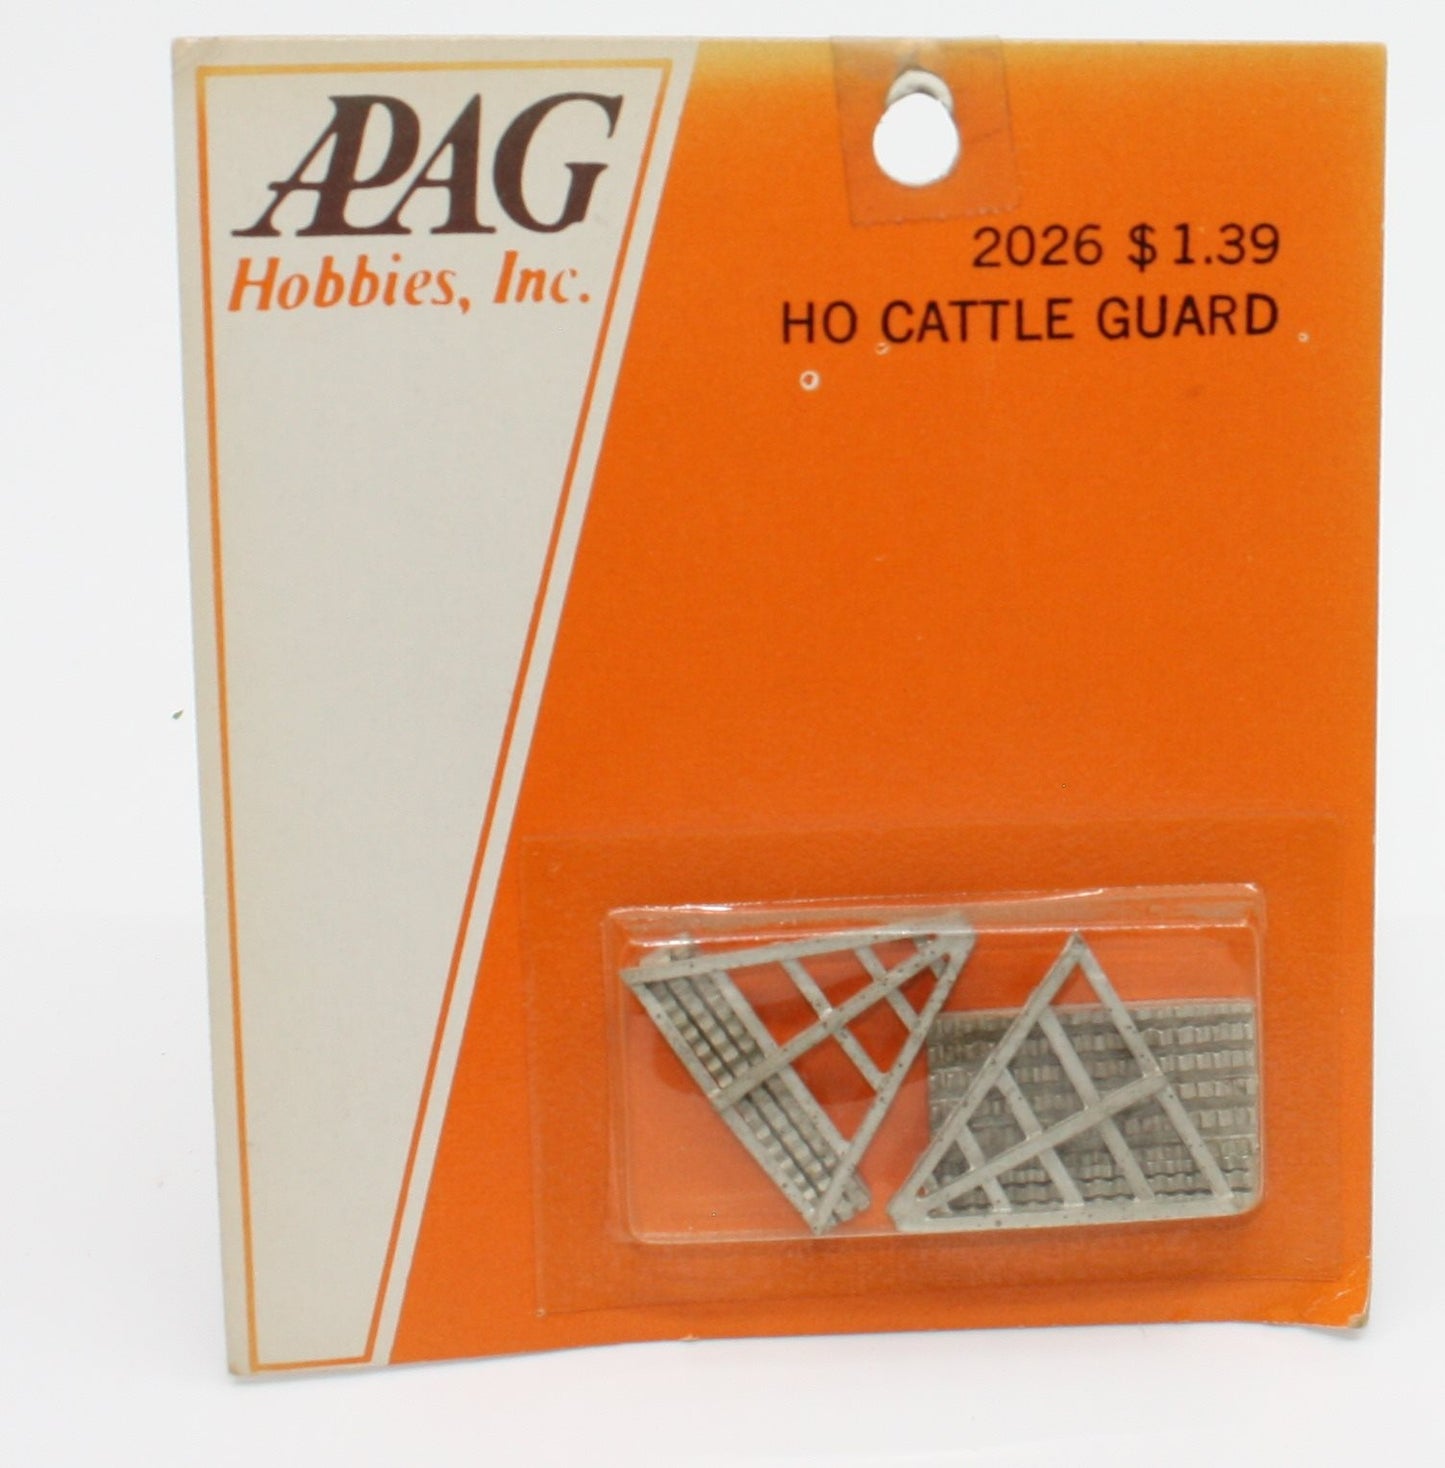 APAG Hobbies 2026 HO Cattle Guard